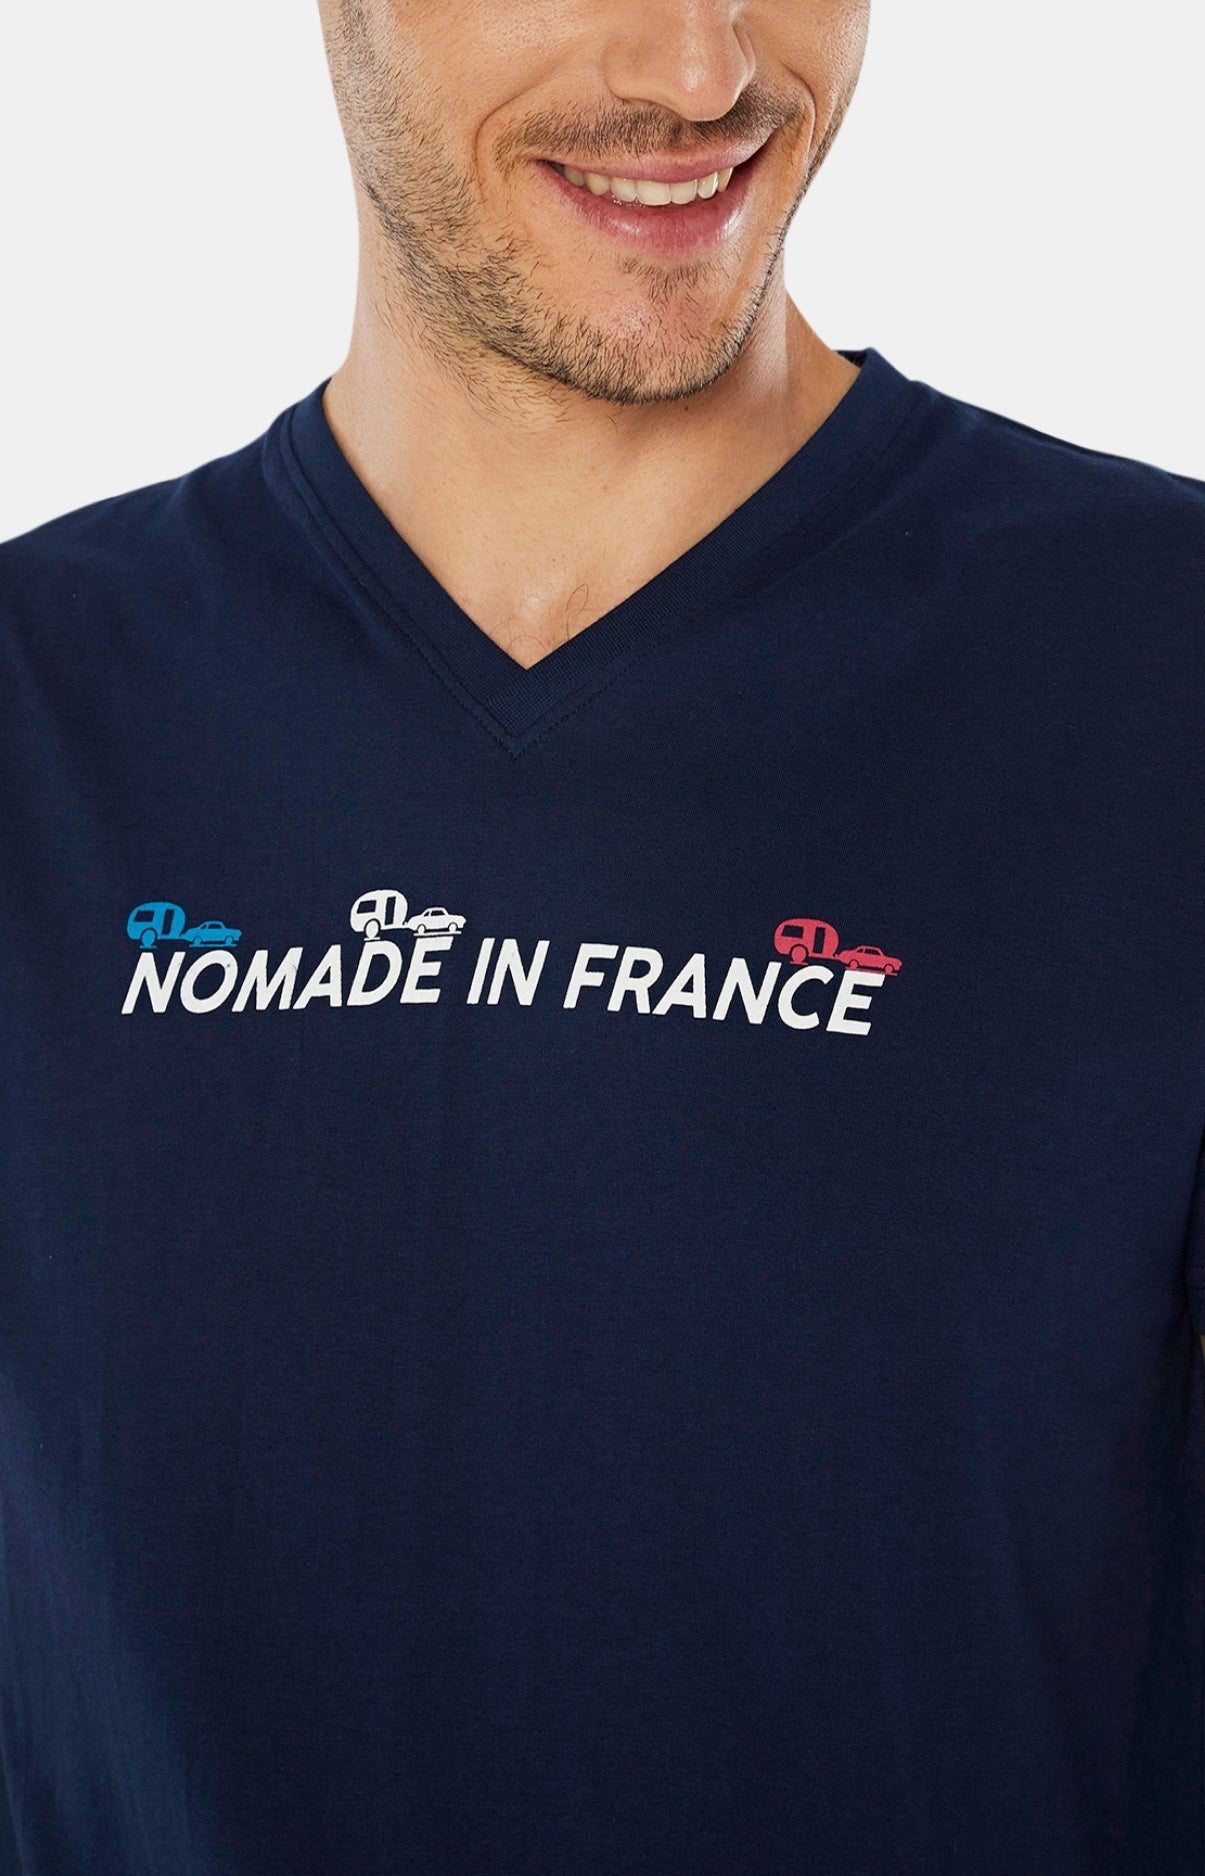 Nomade Pajamas in France